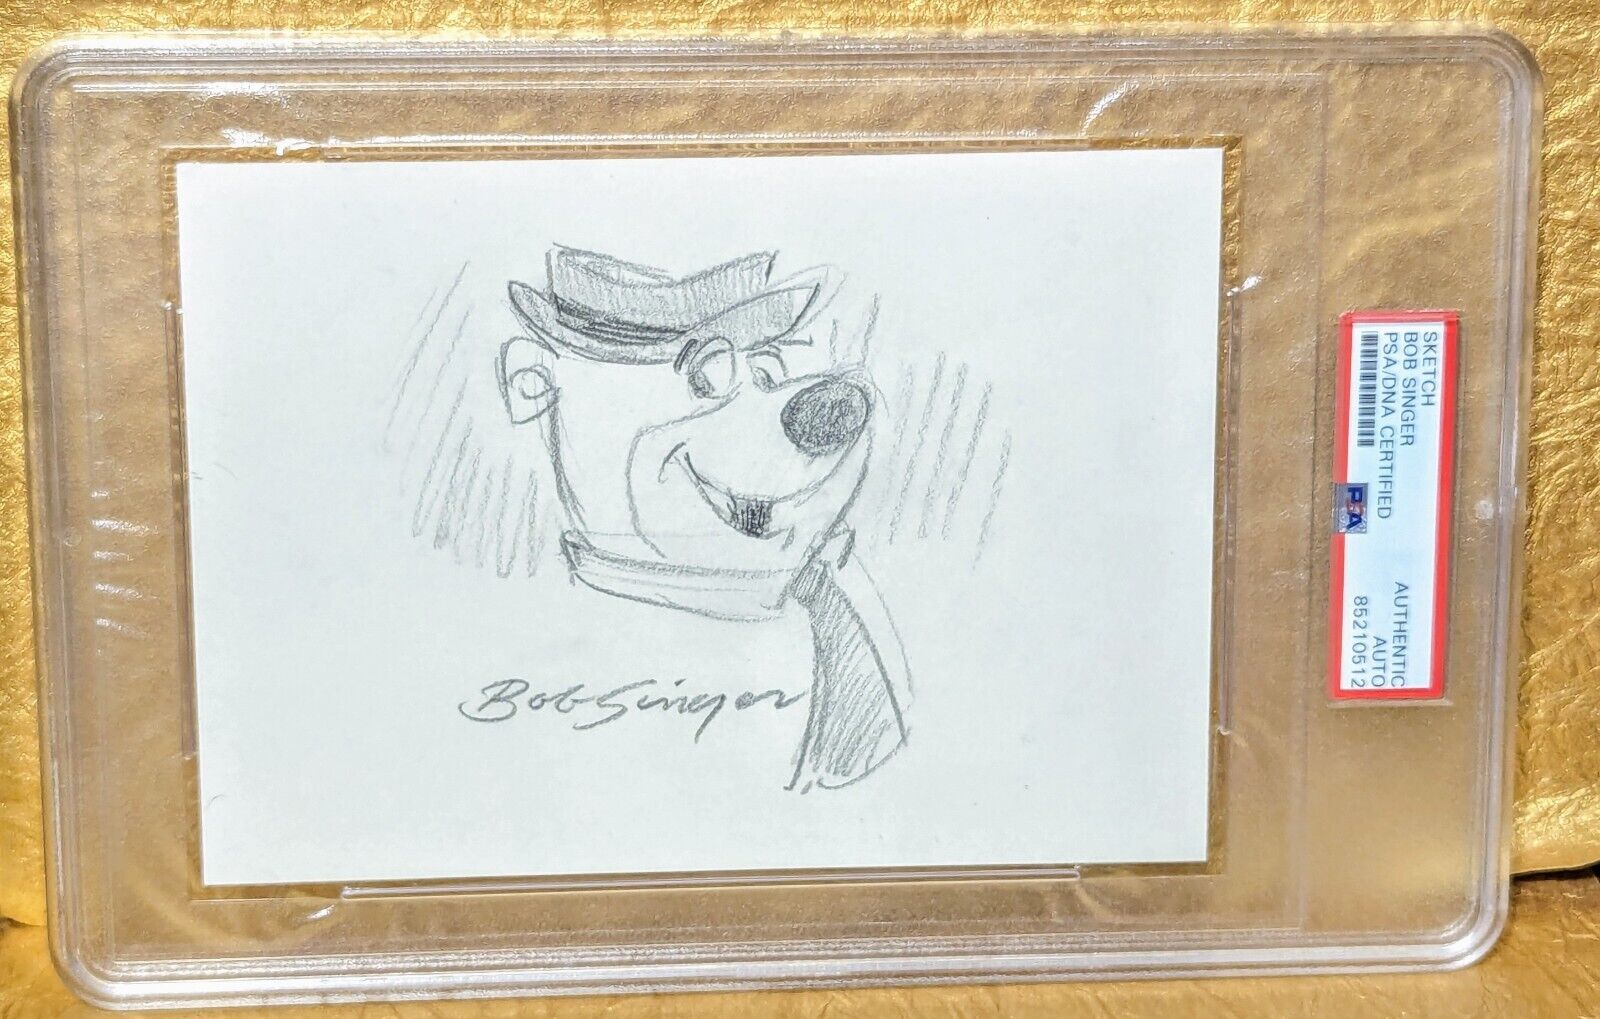 Bob Singer Sketch PSA DNA  Autograph Hand Drawn Signed Yogi Bear 